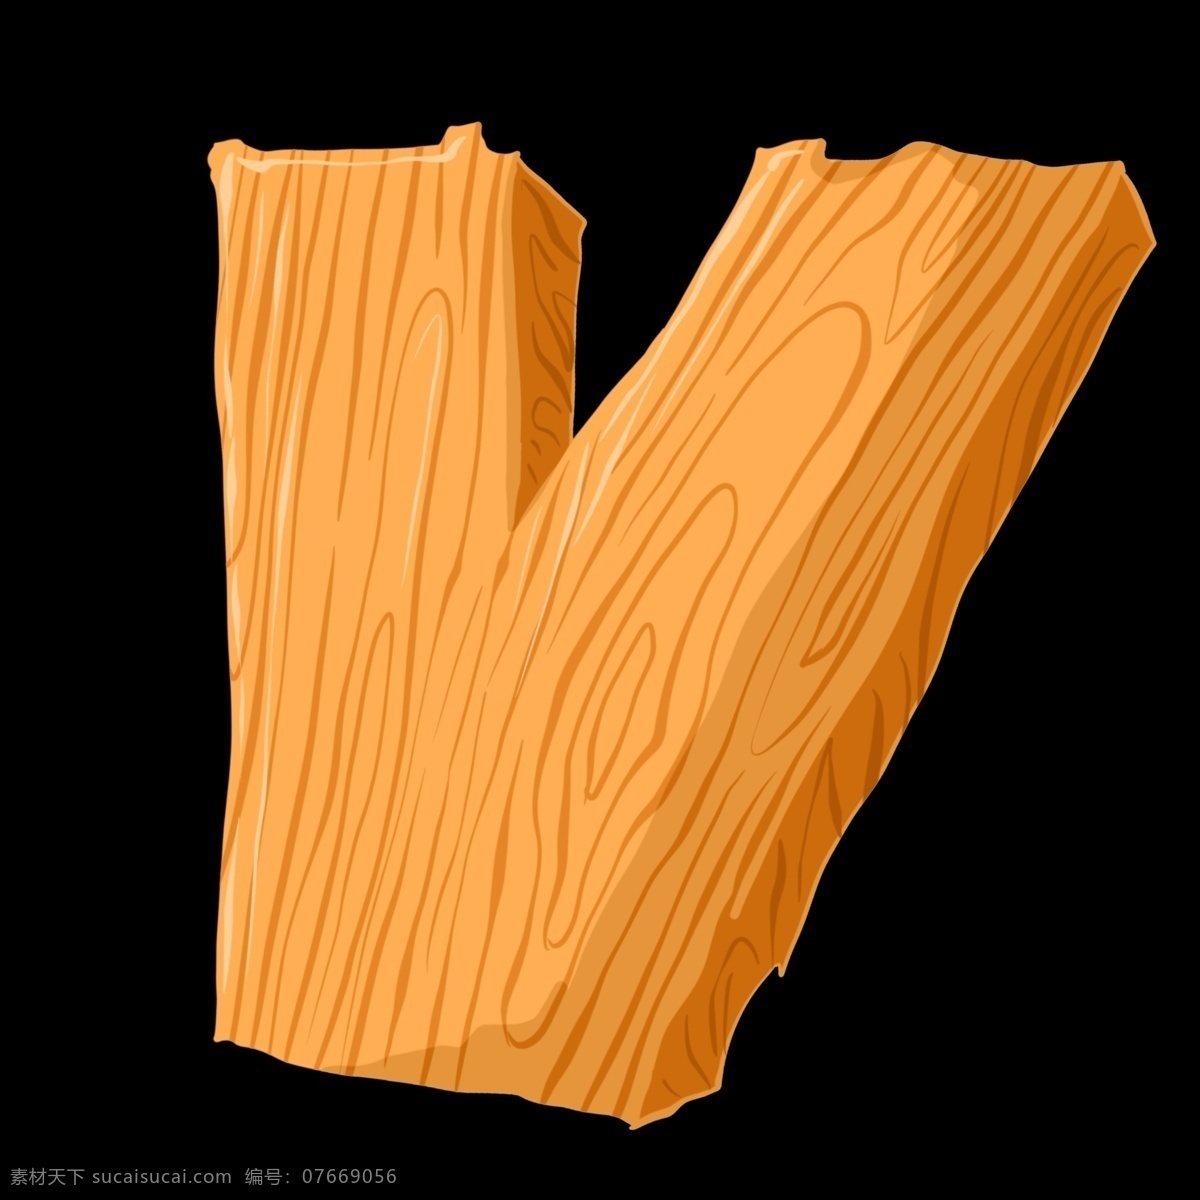 v 字 木板 手绘 插画 v字的木板 创意木板 木板装饰 木板插画 木头木板 实木木板 家居木板